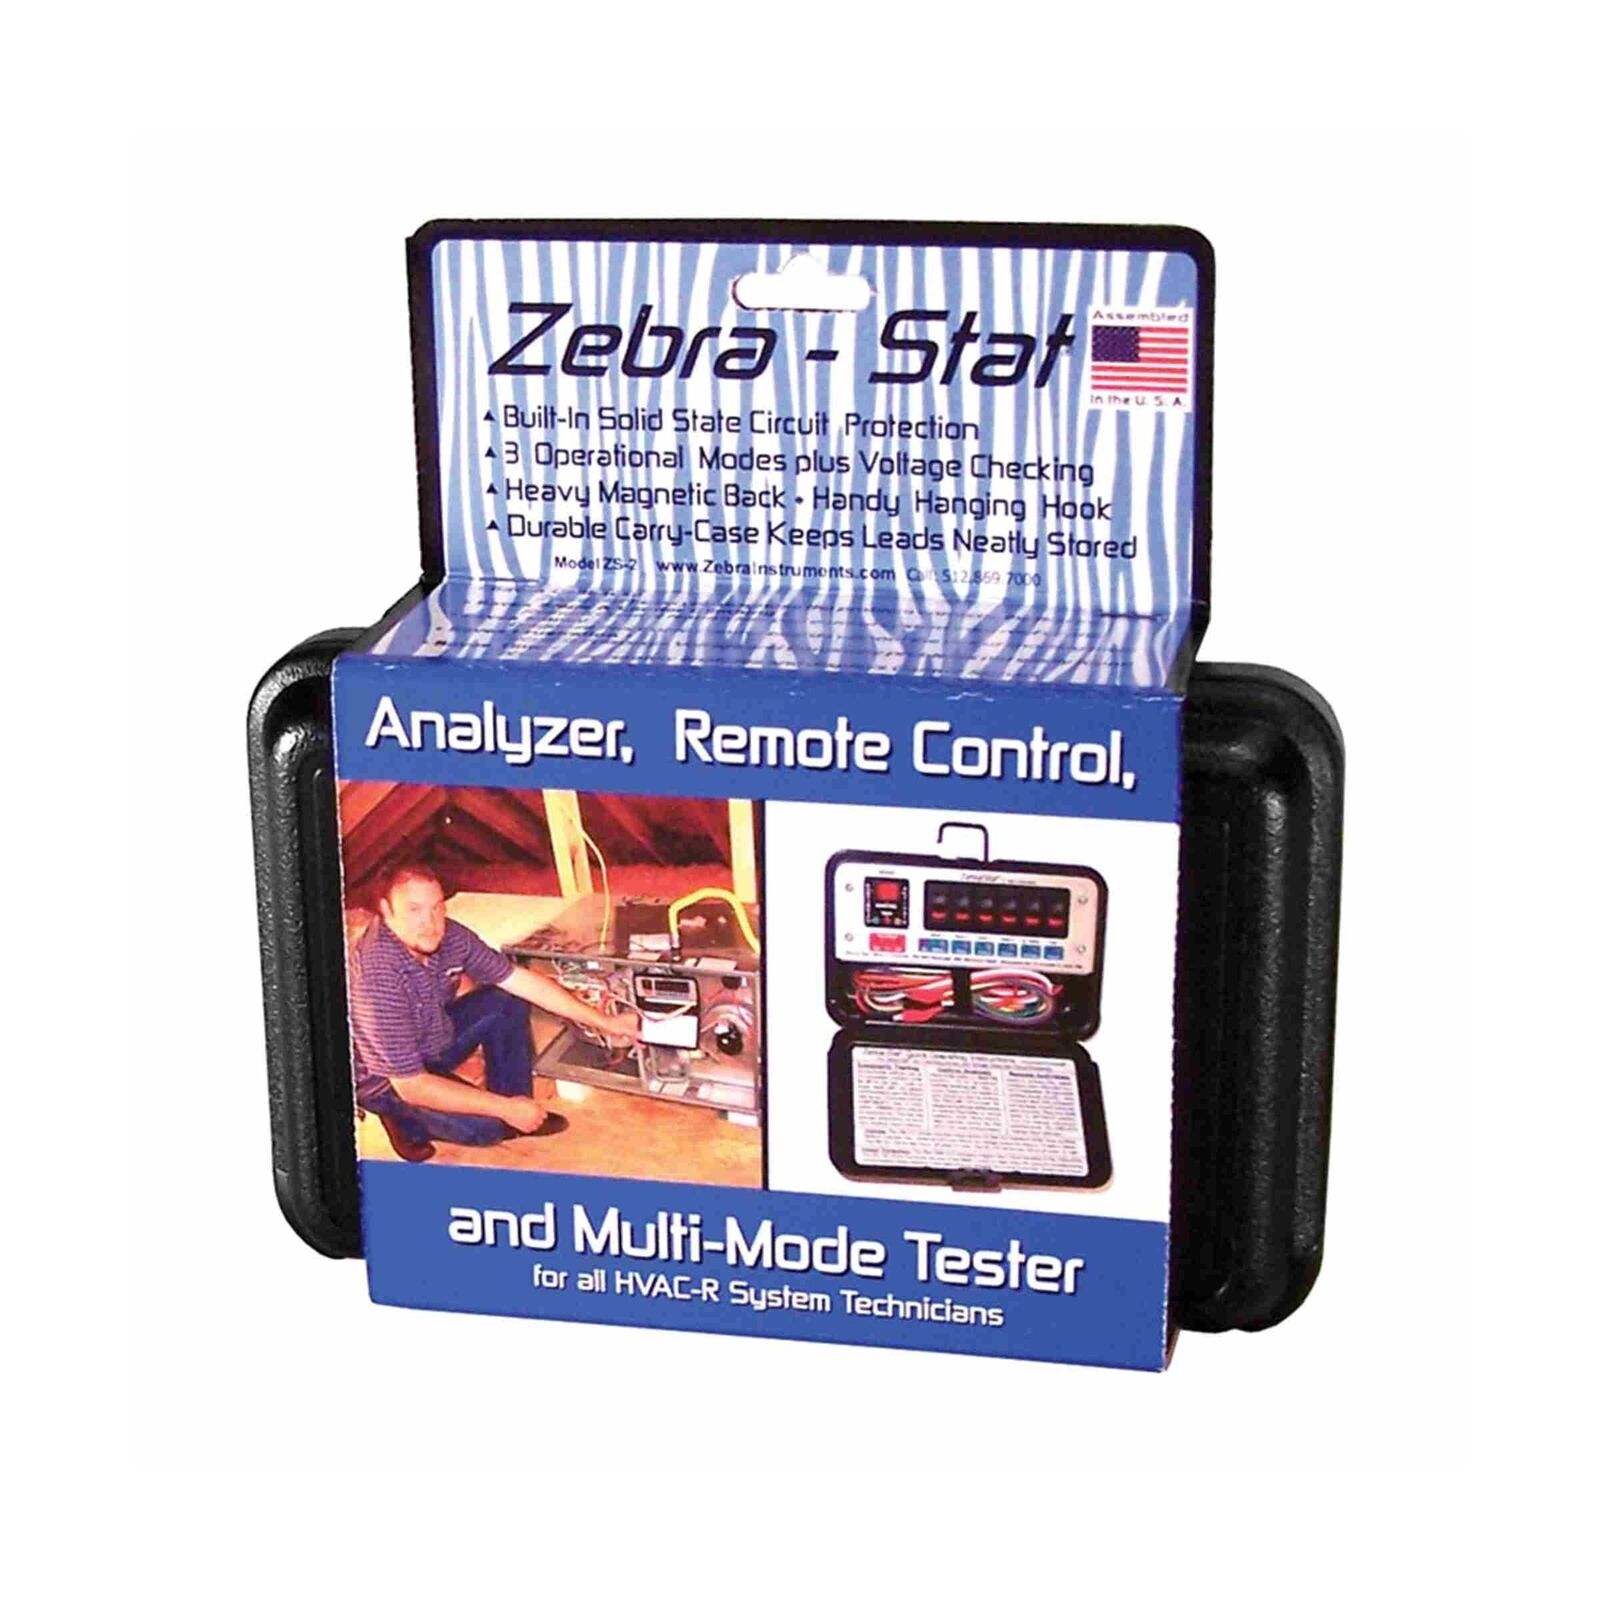 Zebra Instruments, Zebra Stat - Analyzer, Remote Control & Multi-Mode Tester ...